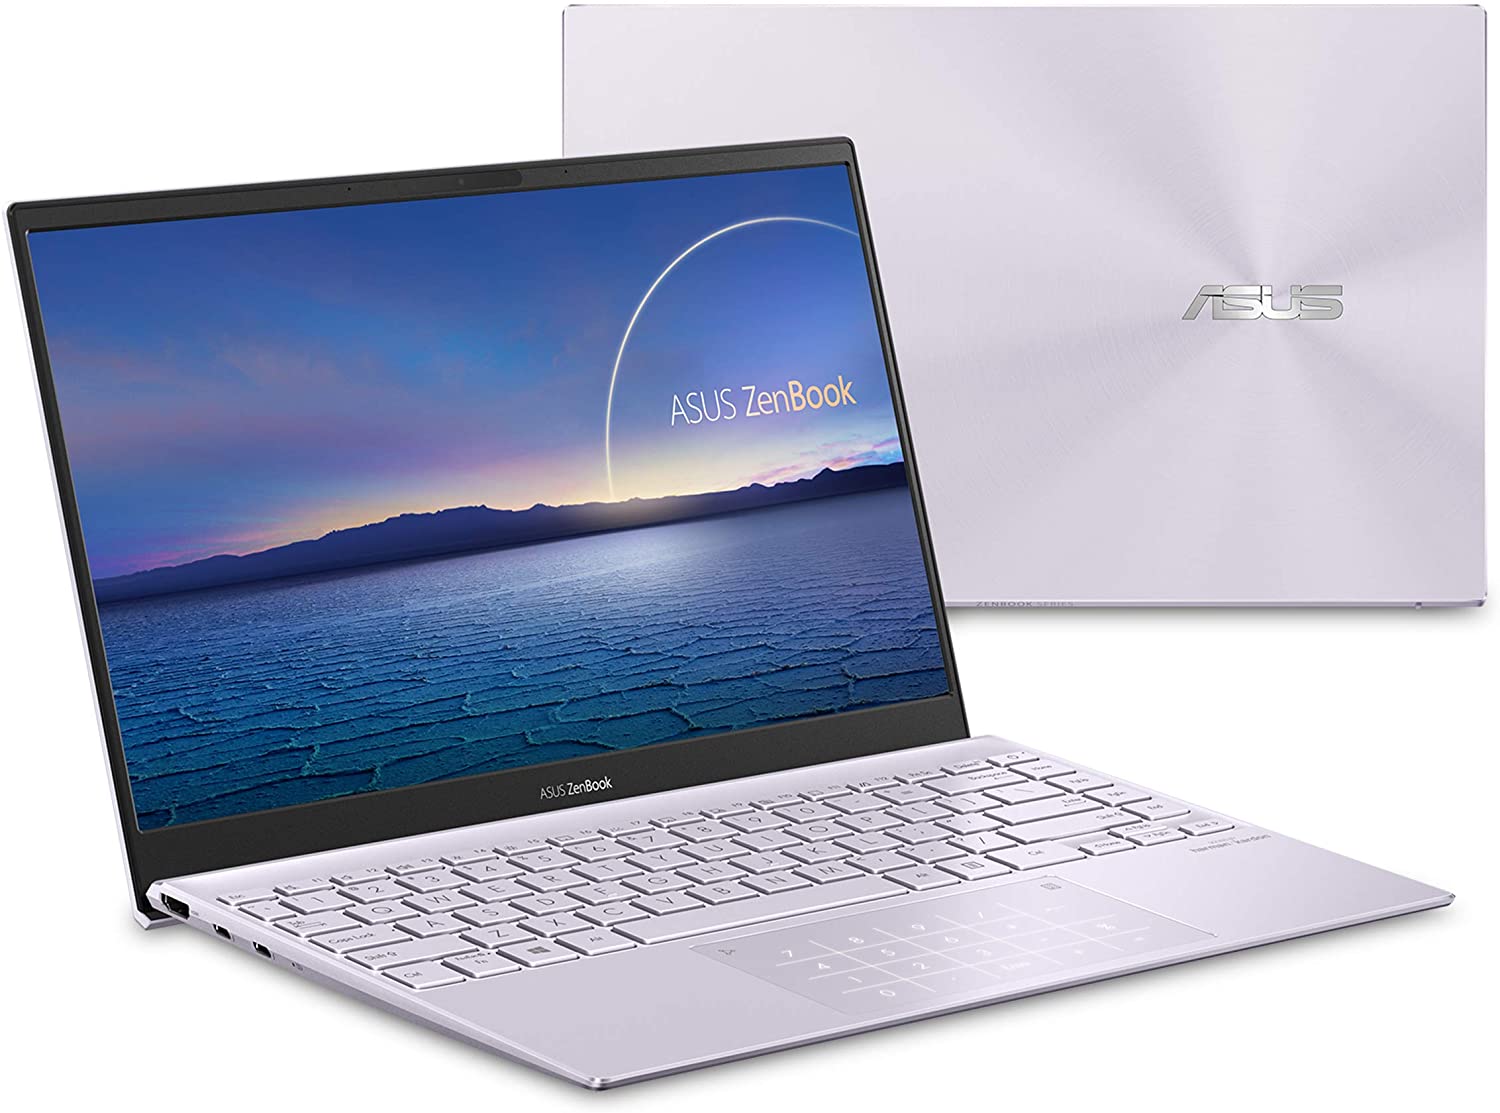 ASUS Laptop Cyber Monday Sale, Deals [year] - HUGE Discount 4